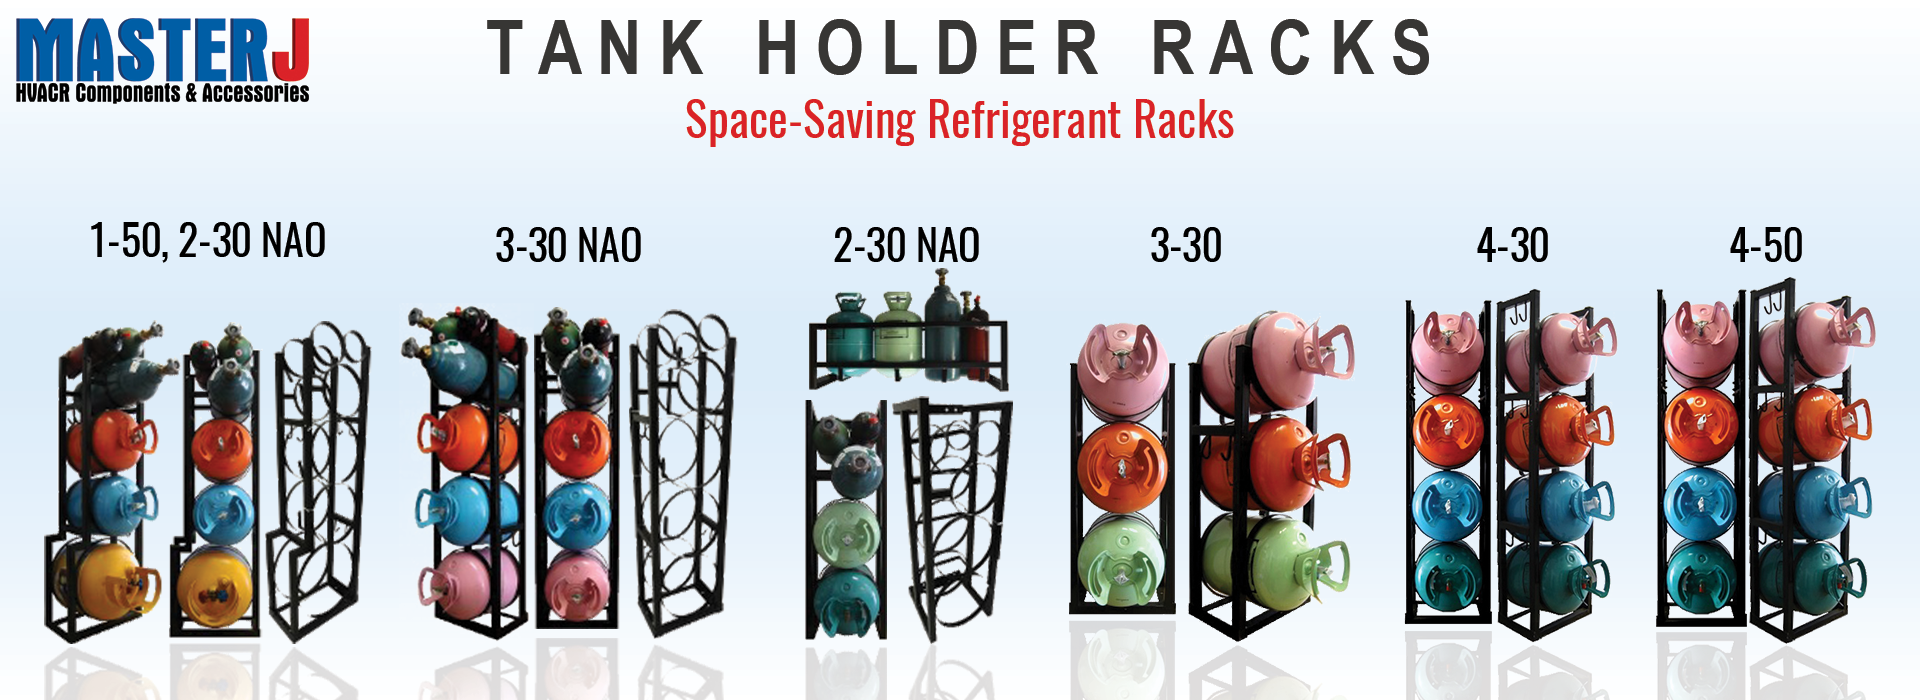 Refrigerant Tank Holder Racks from MasterJ, Inc.